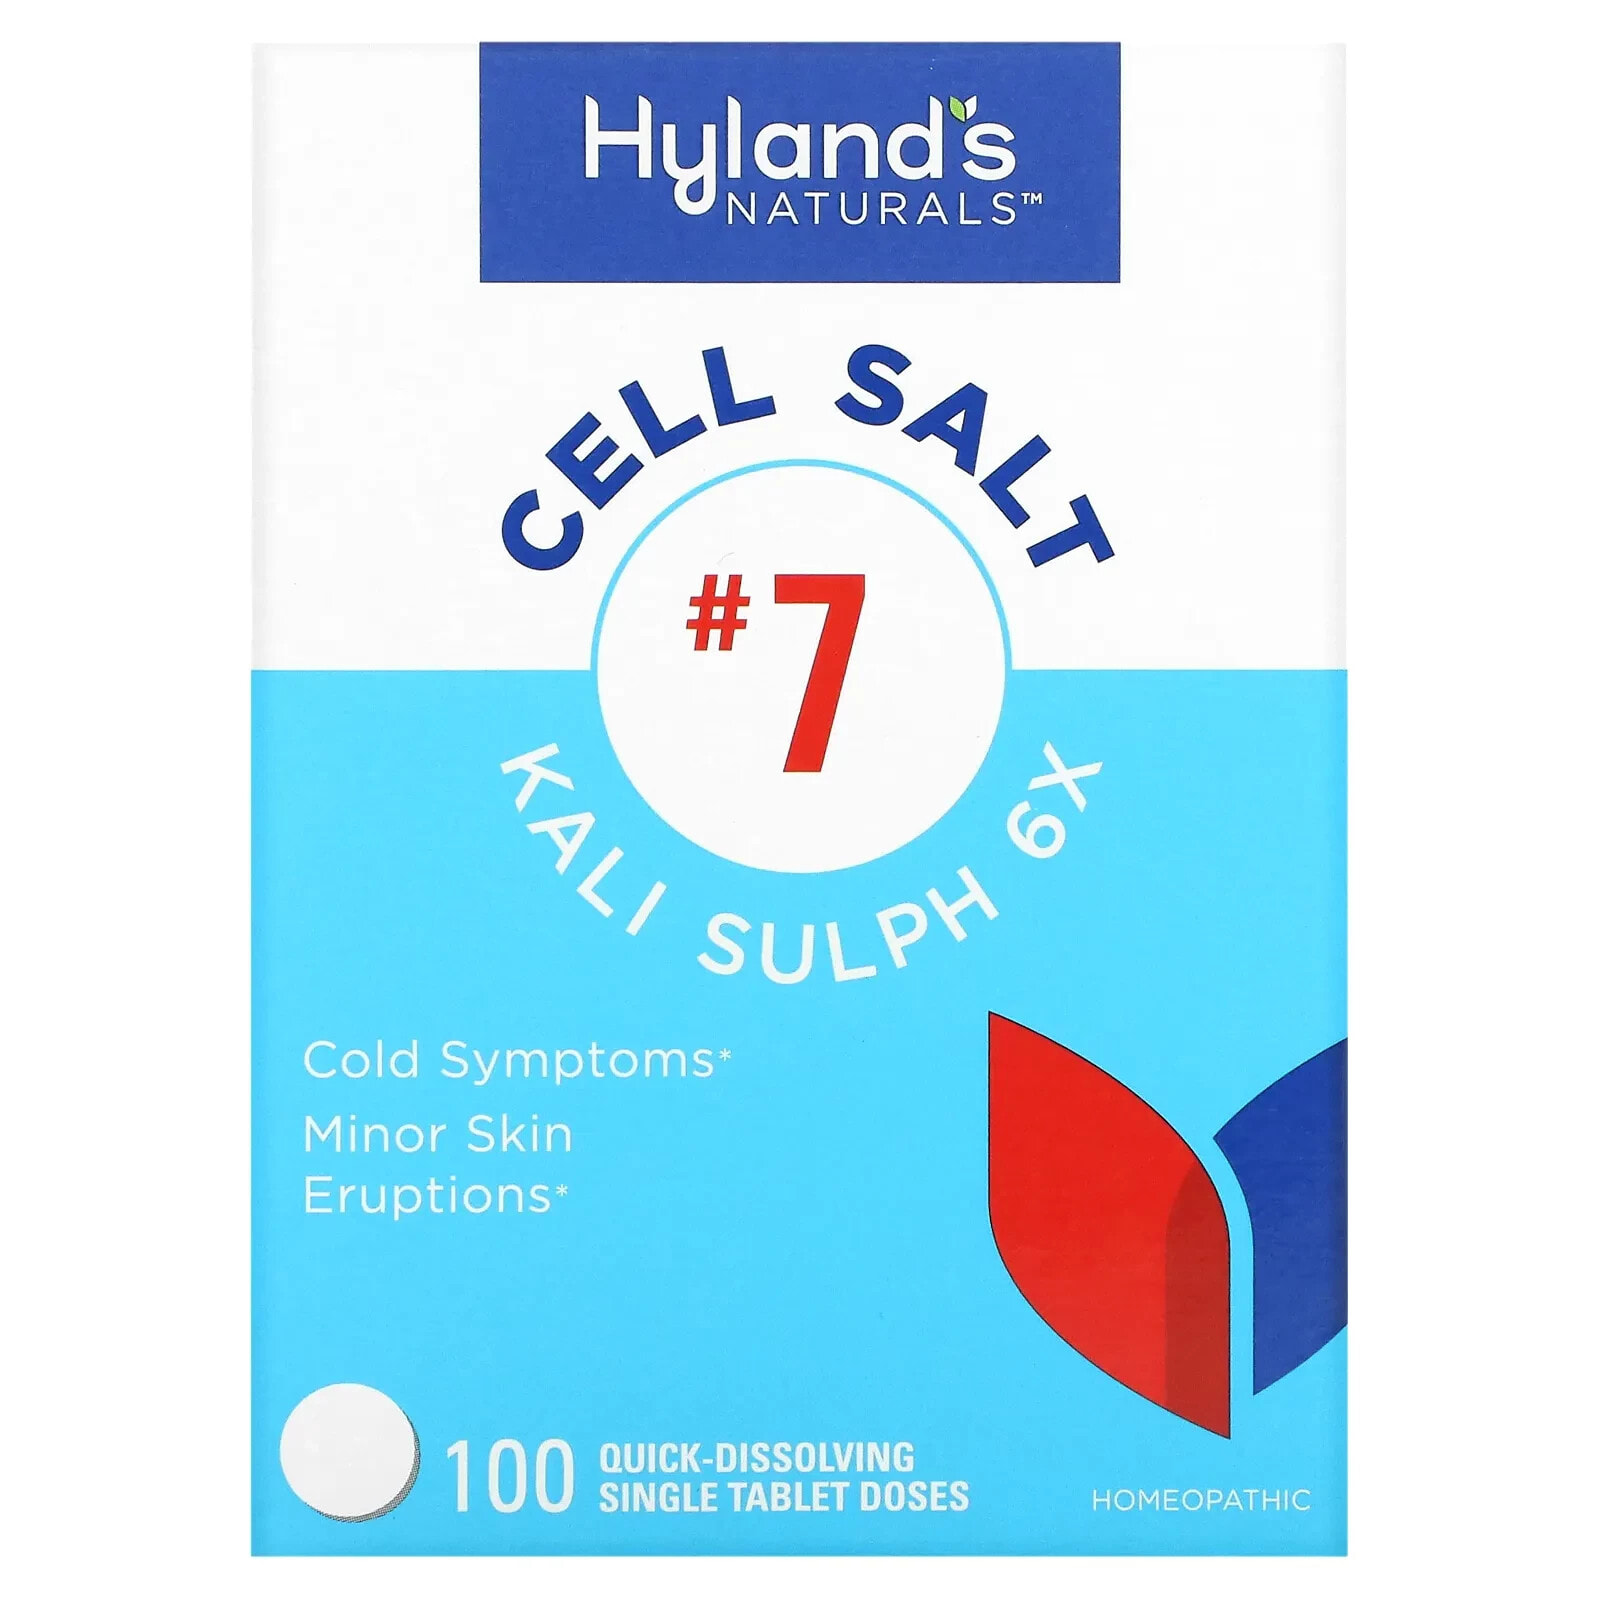 Hyland's, Cell Salt #7, Kali Sulph 6X, 100 Quick-Dissolving Single Tablet